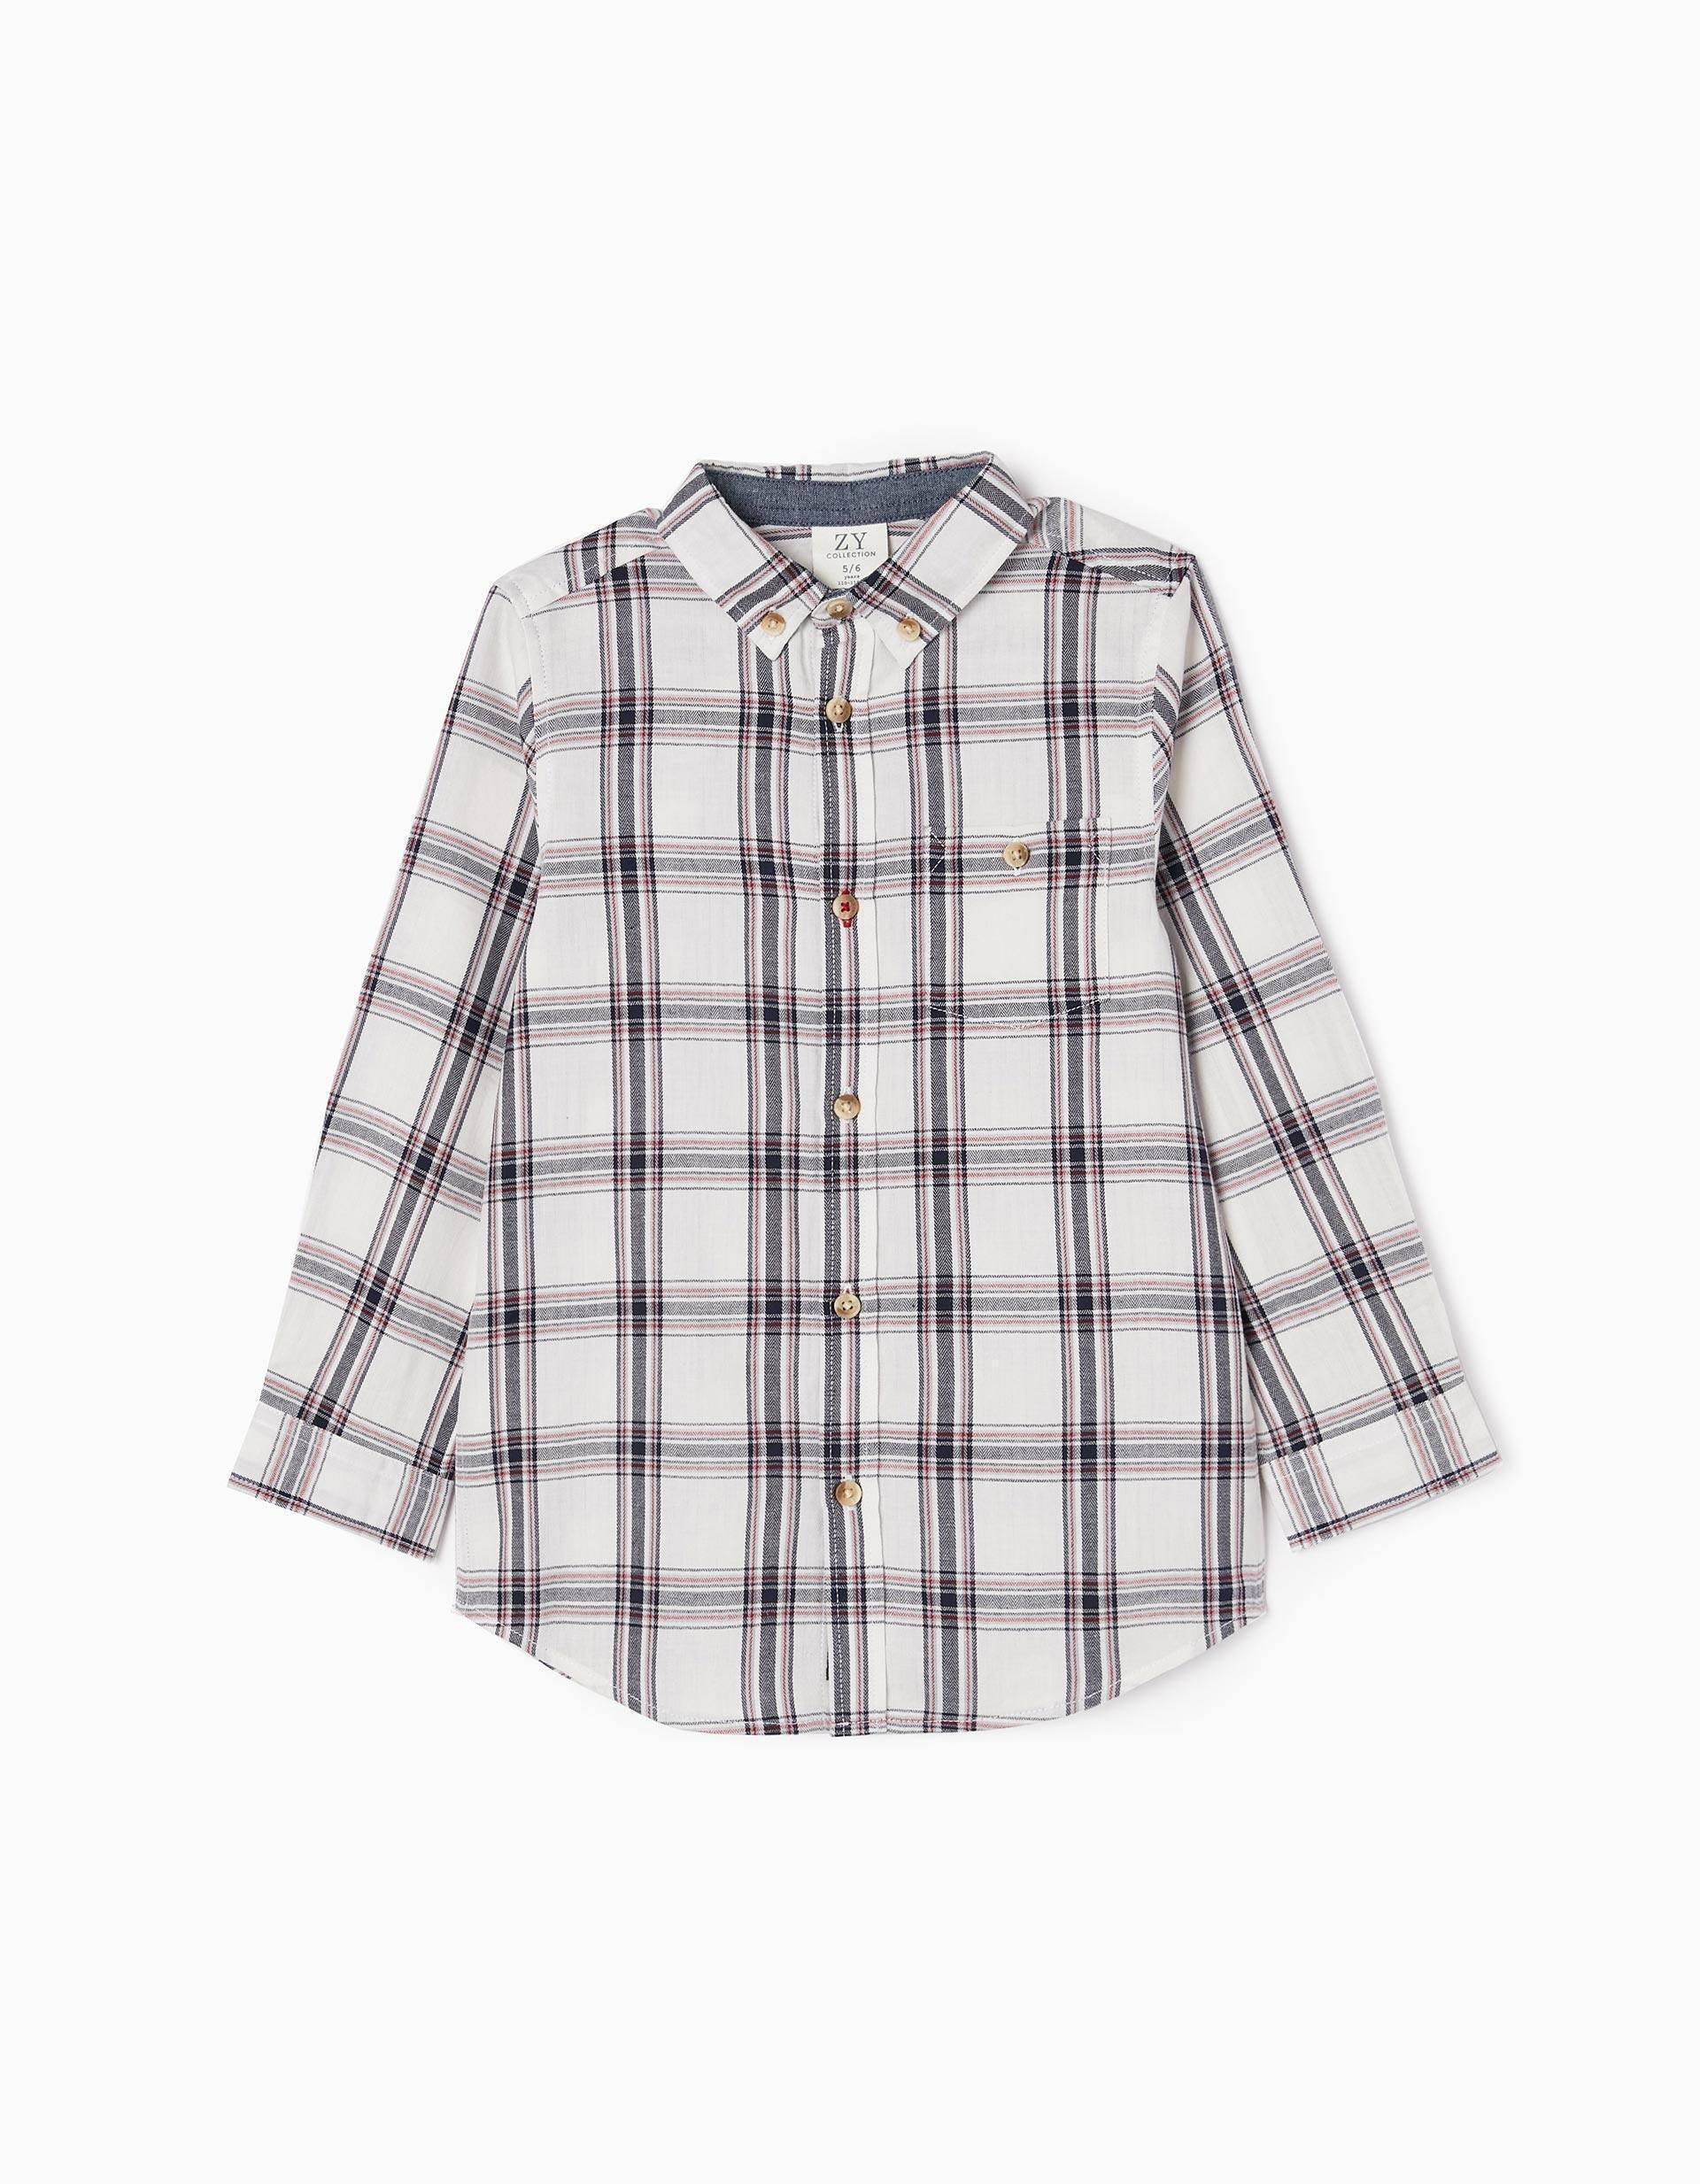 Gant - White Striped Cotton Plaid Shirt, Baby Boys